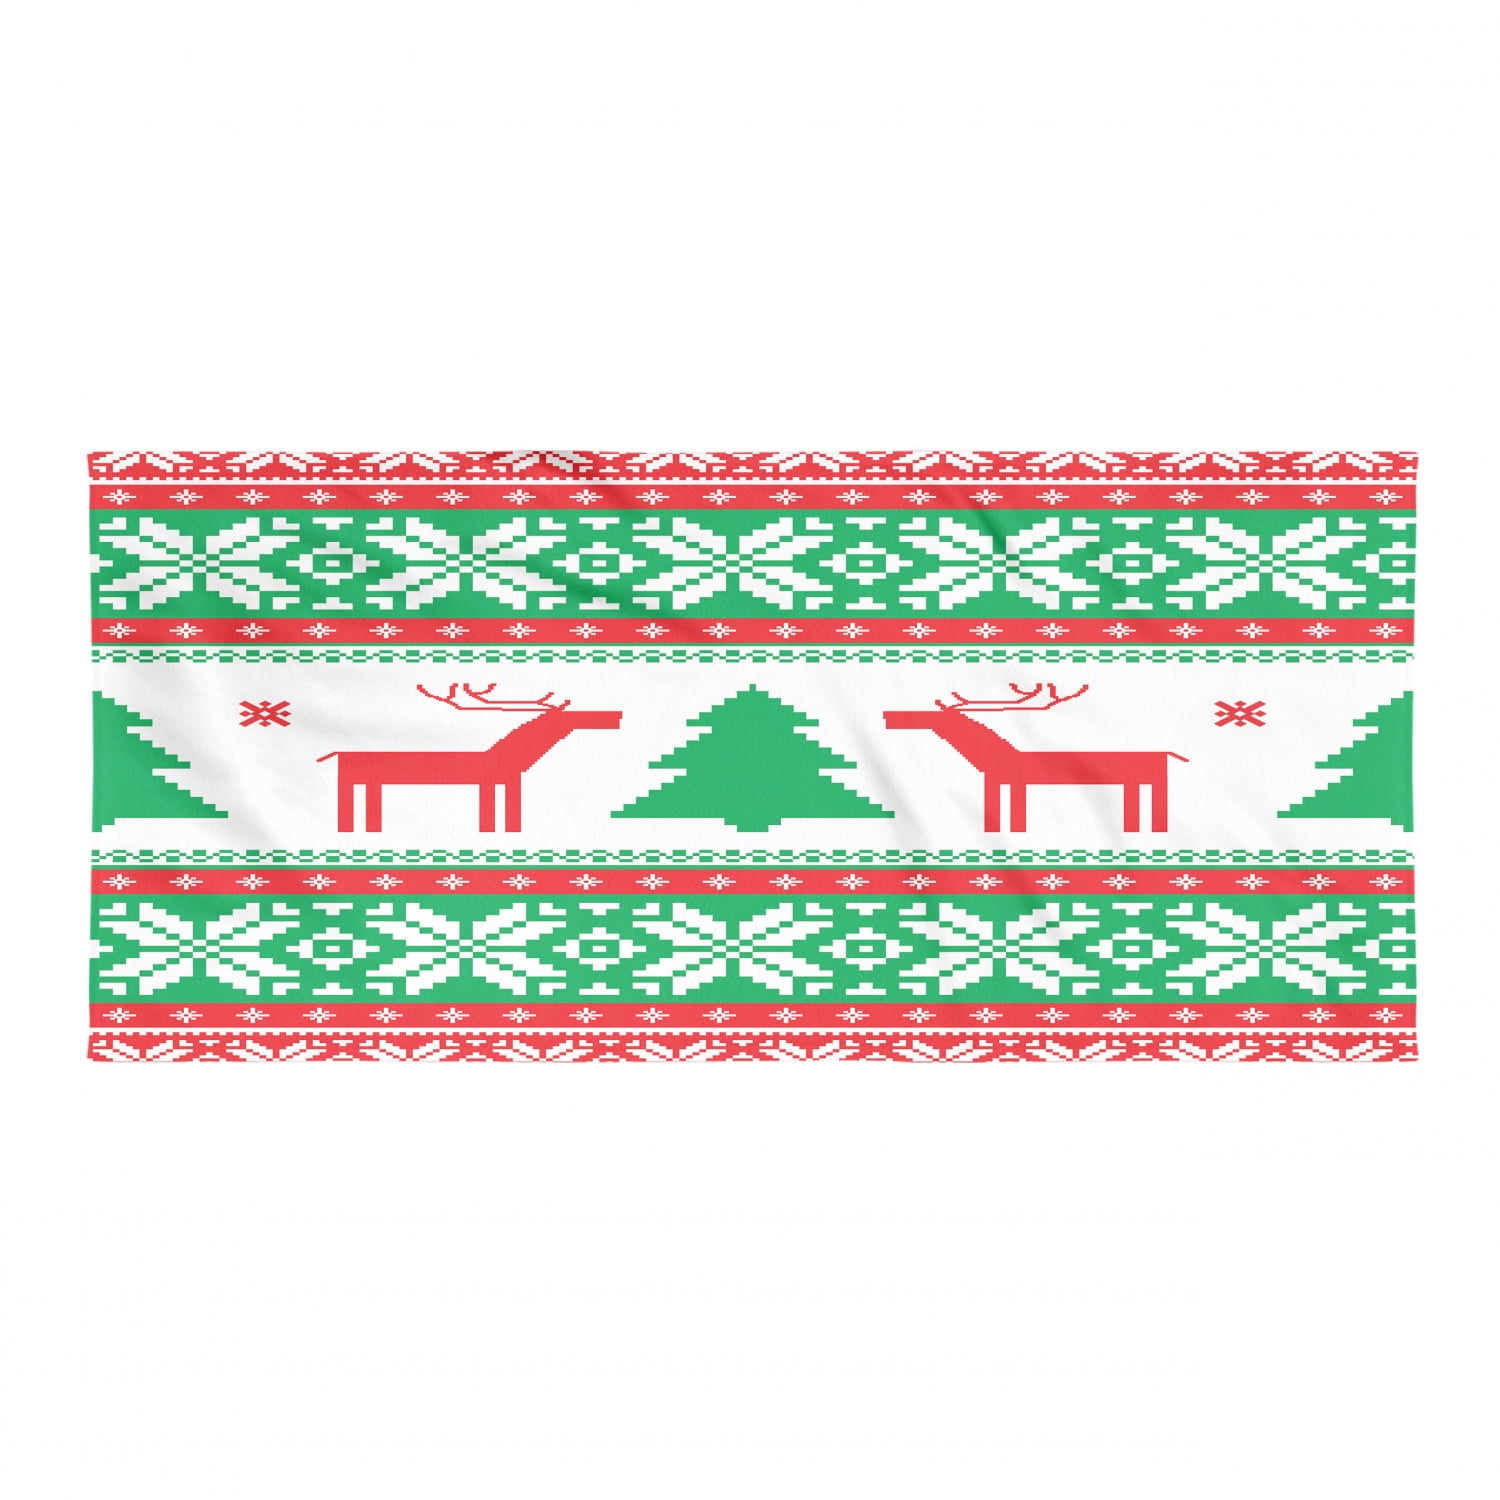  Microfiber Beach Towel, Christmas Snowflake Red